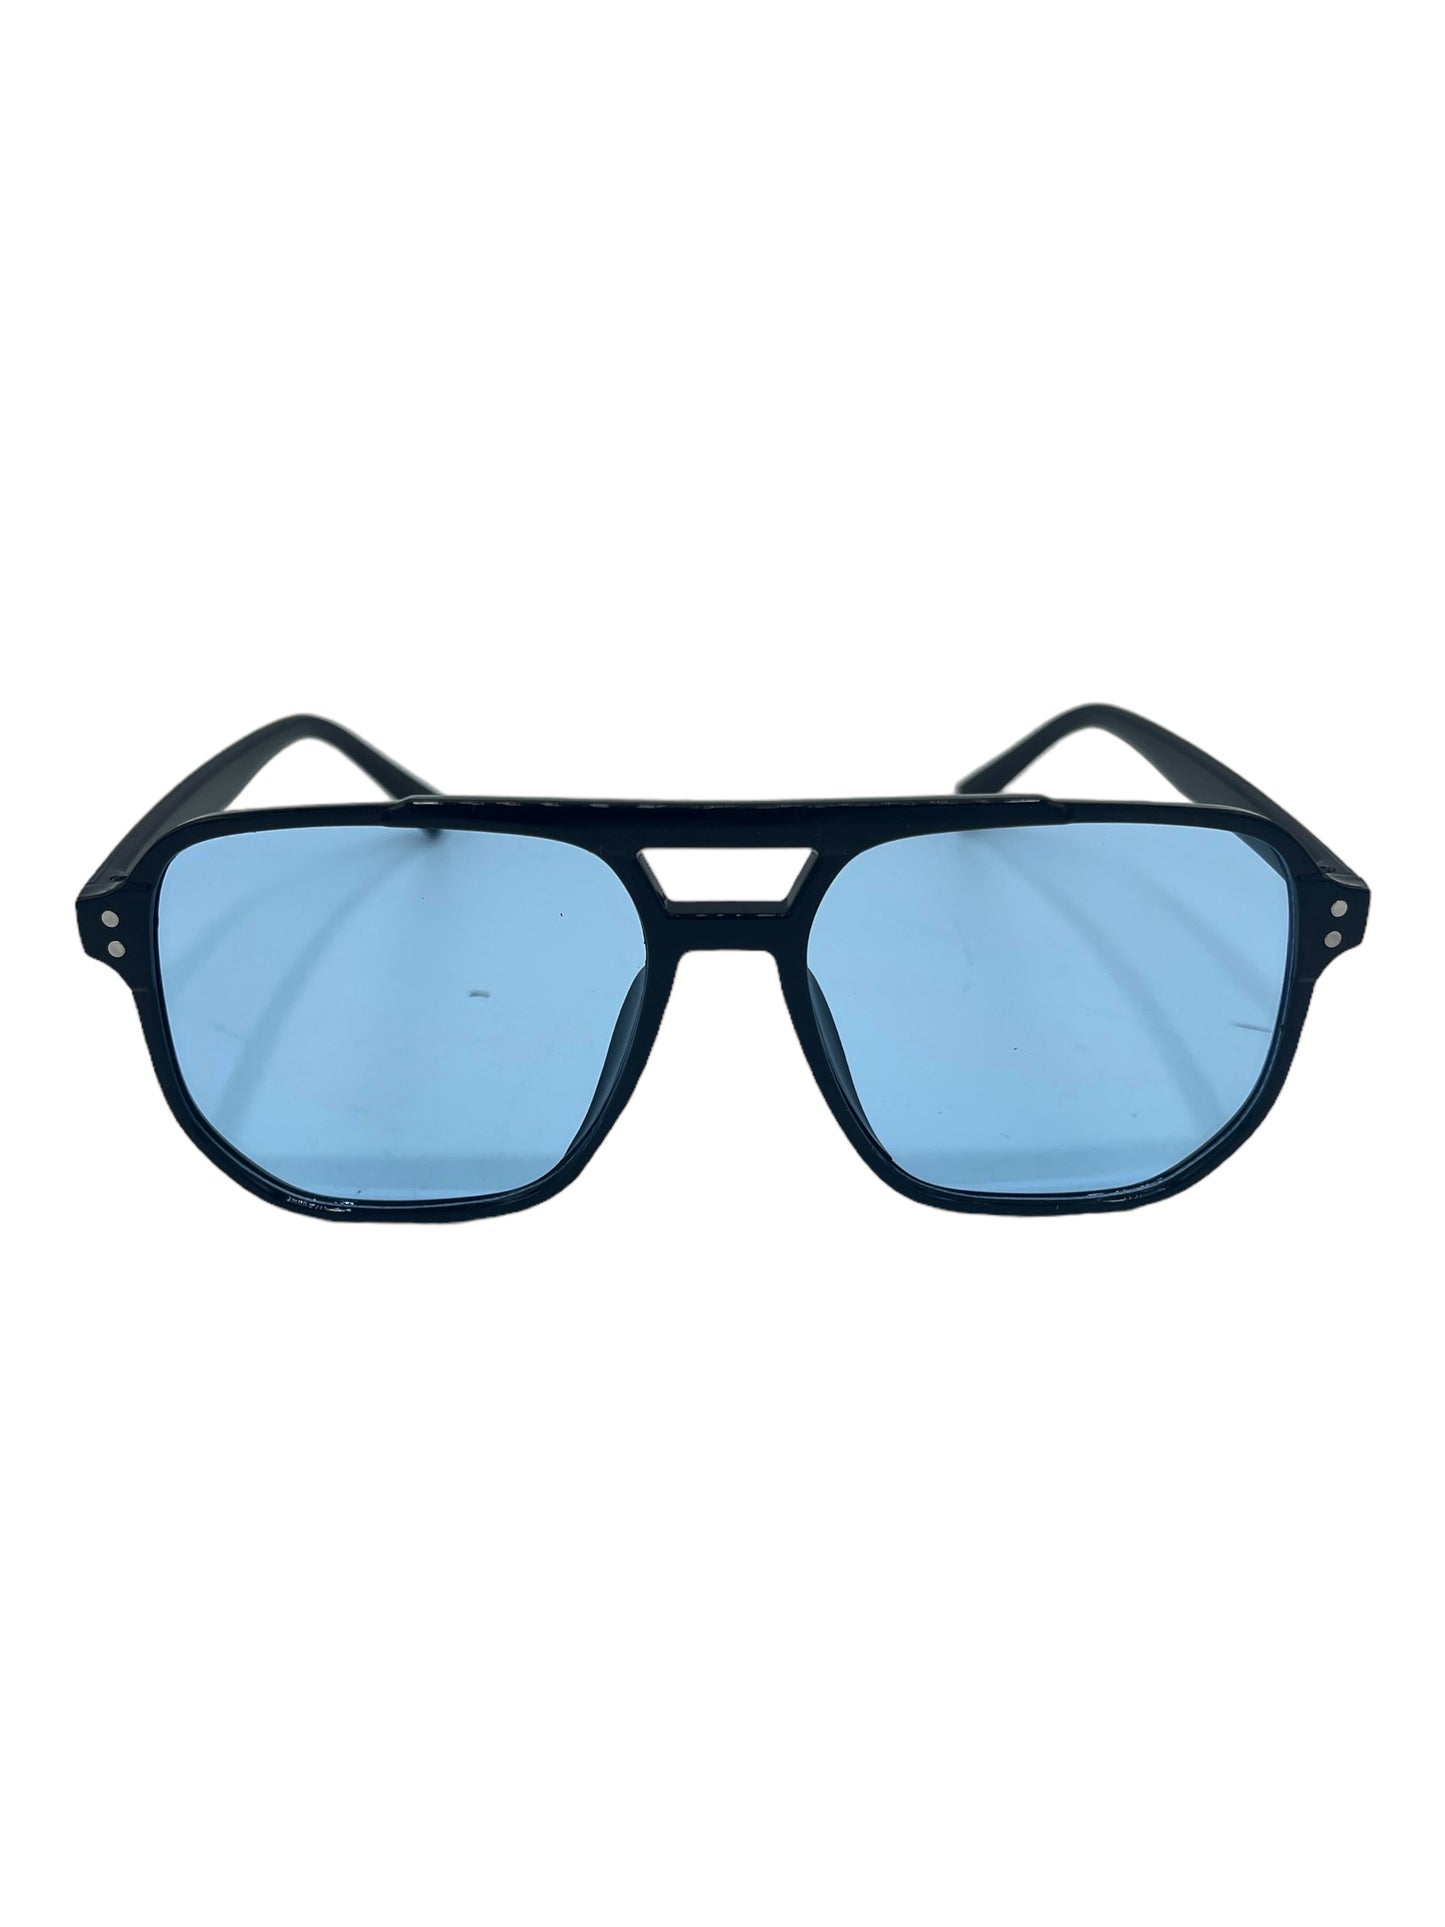 Oversized Frame Aviator Style Everyday Sunglasses